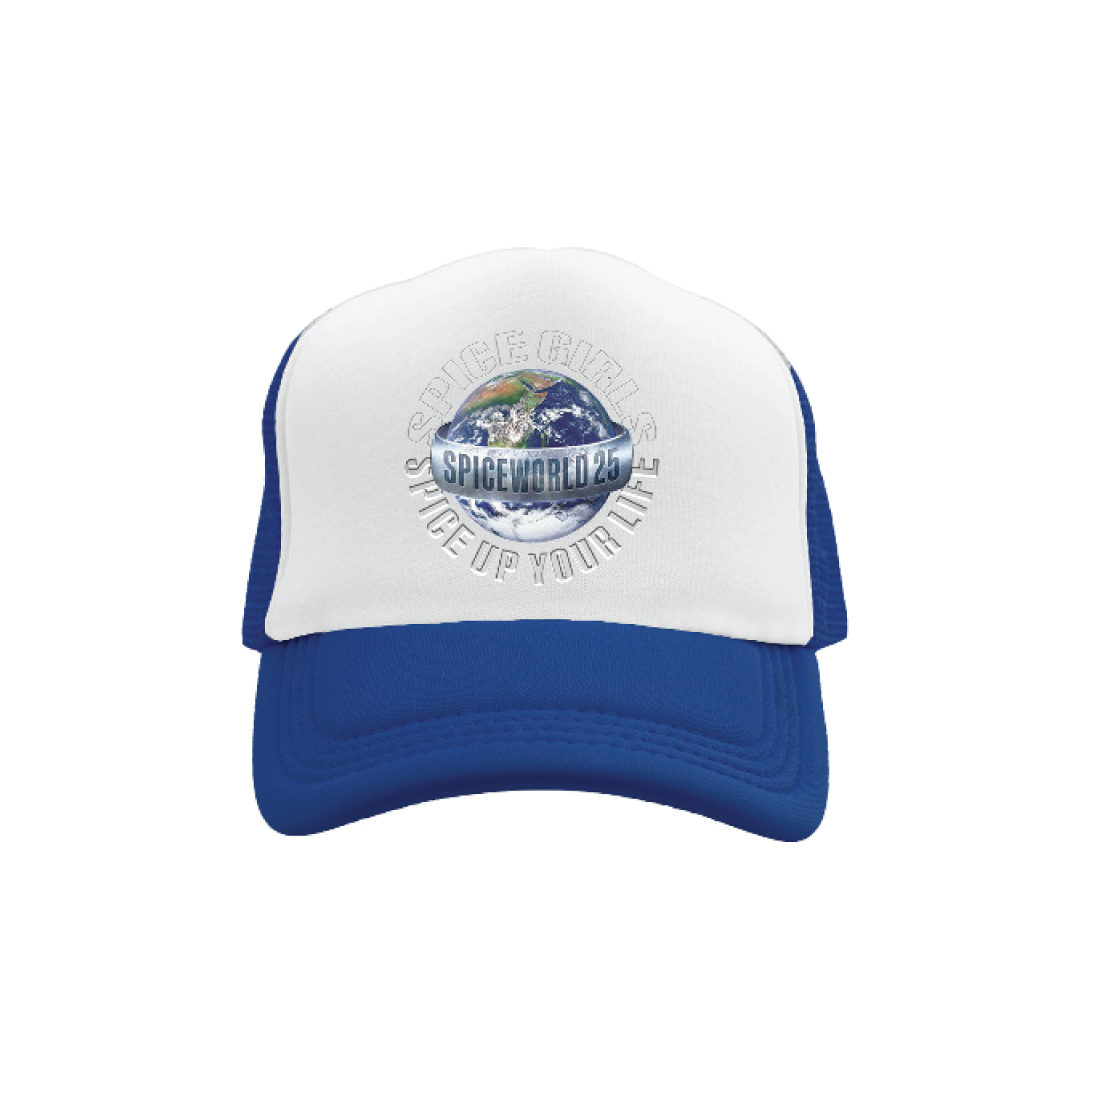 Spiceworld 25 Trucker Hat